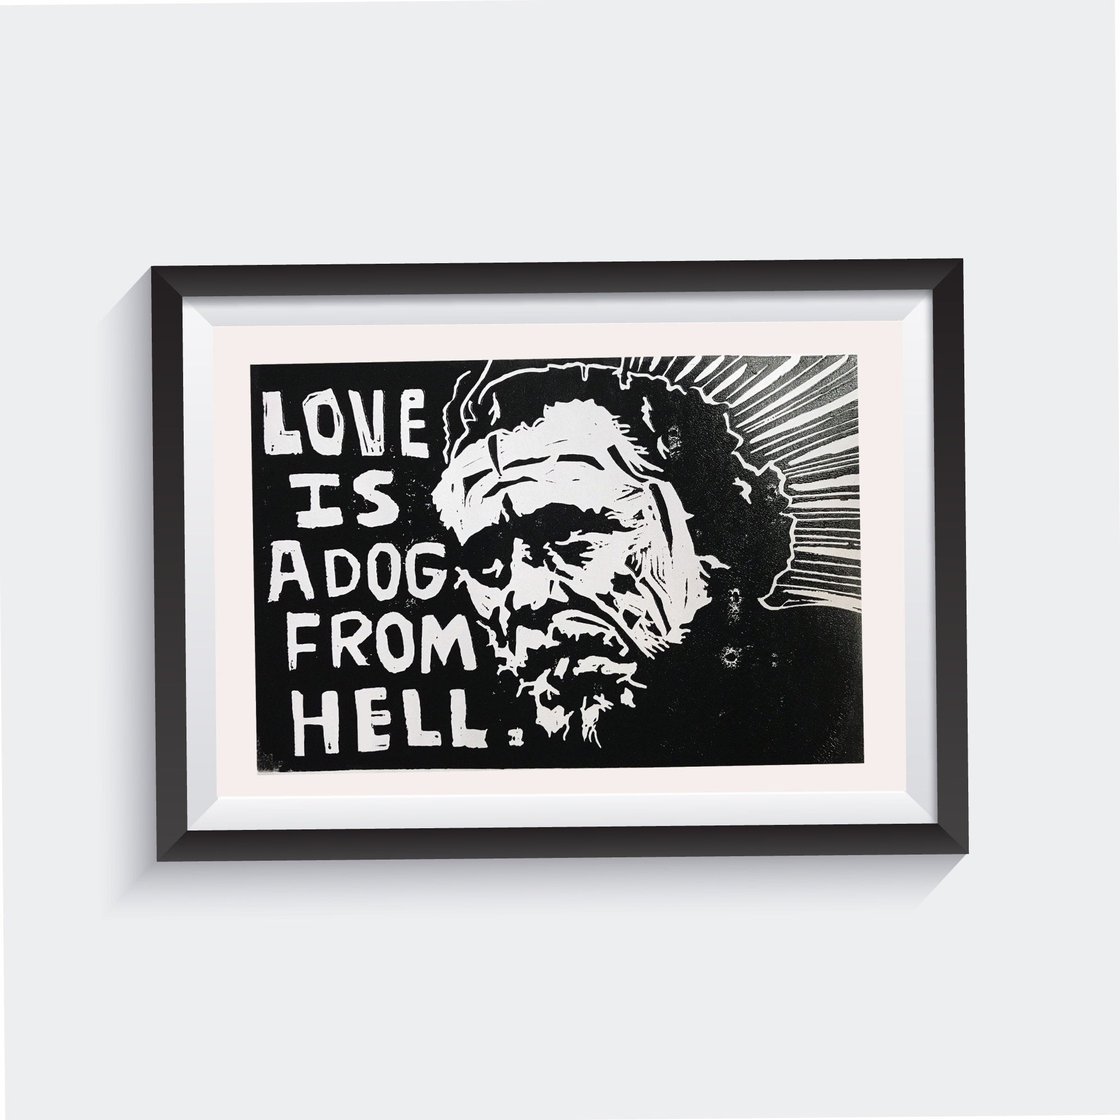 Image of Charles Bukowski - Love is a Dog from Hell. Handmade Linocut print on acid free paper.